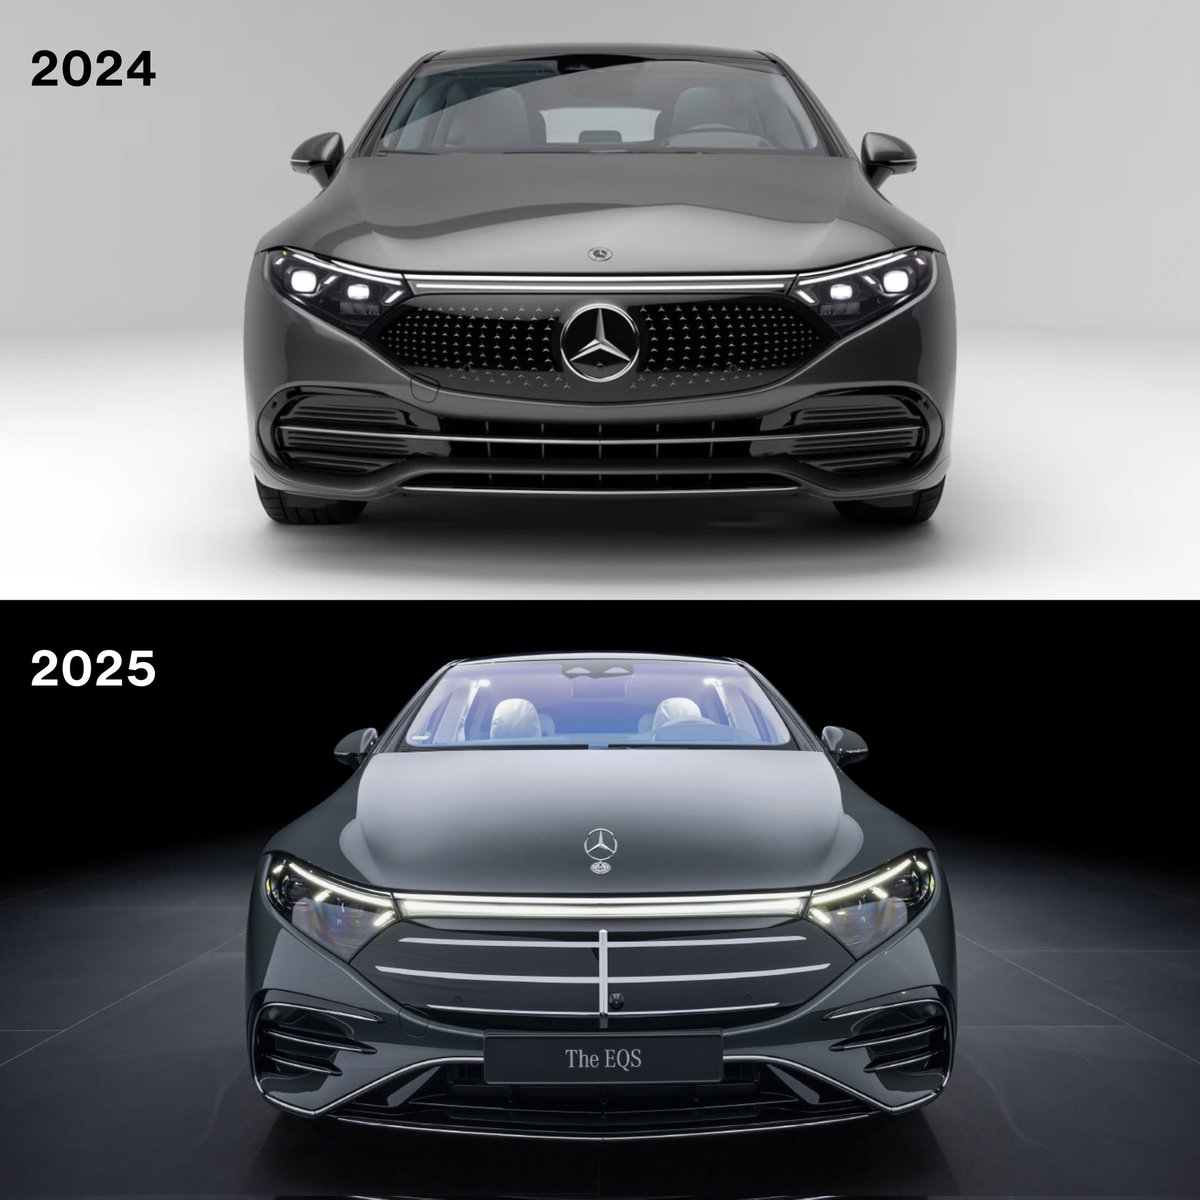 New front grille on the 2025 #Mercedes EQS sedan comparison